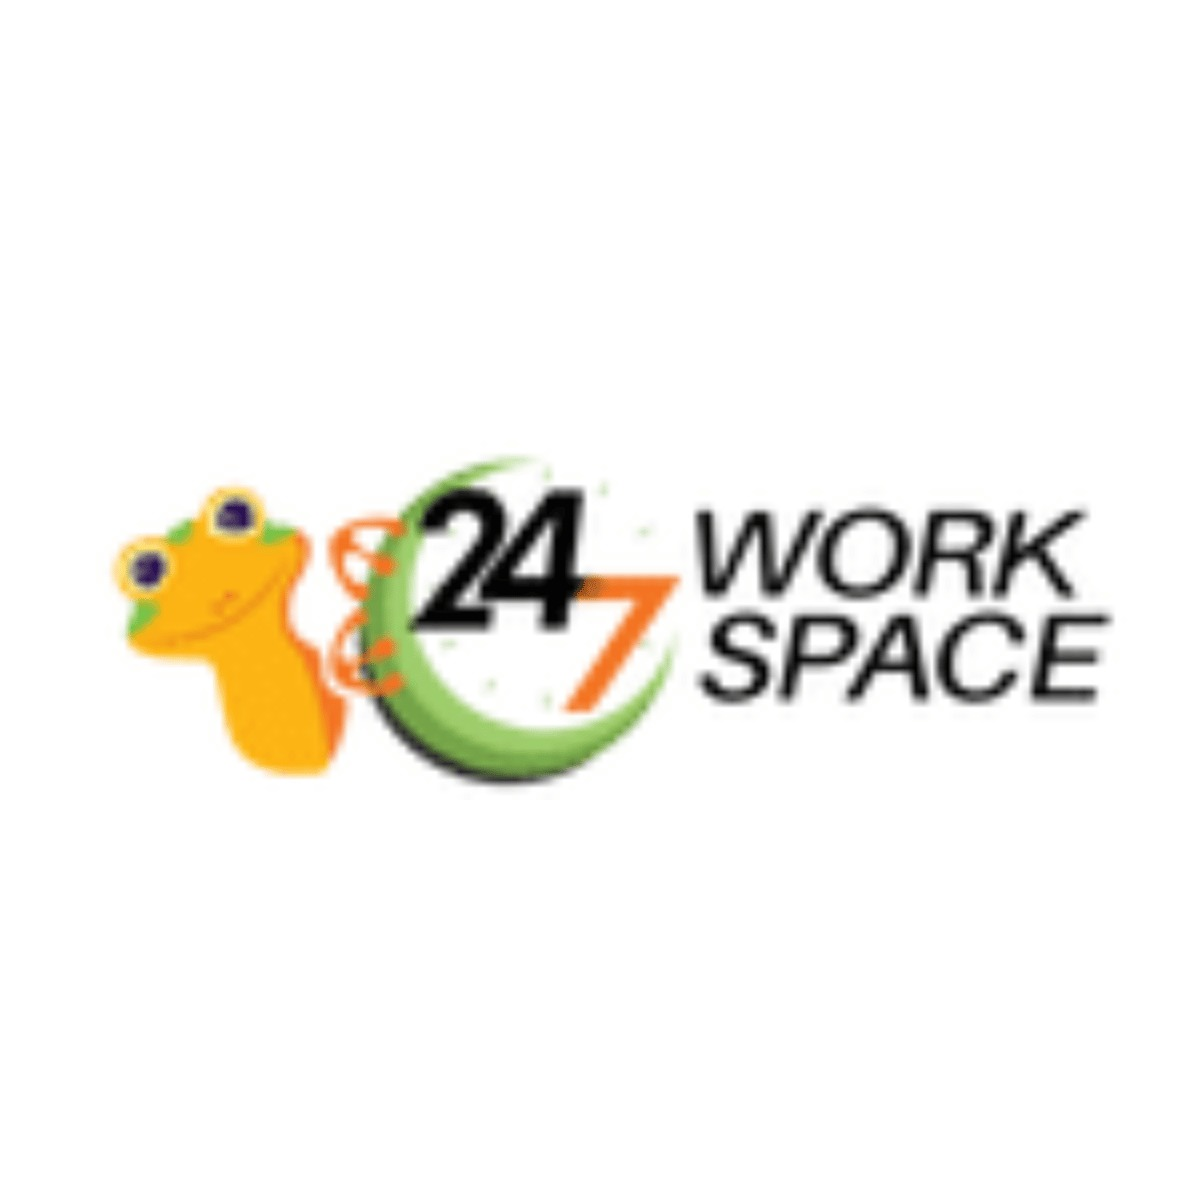 247 Workspace Office Furniture